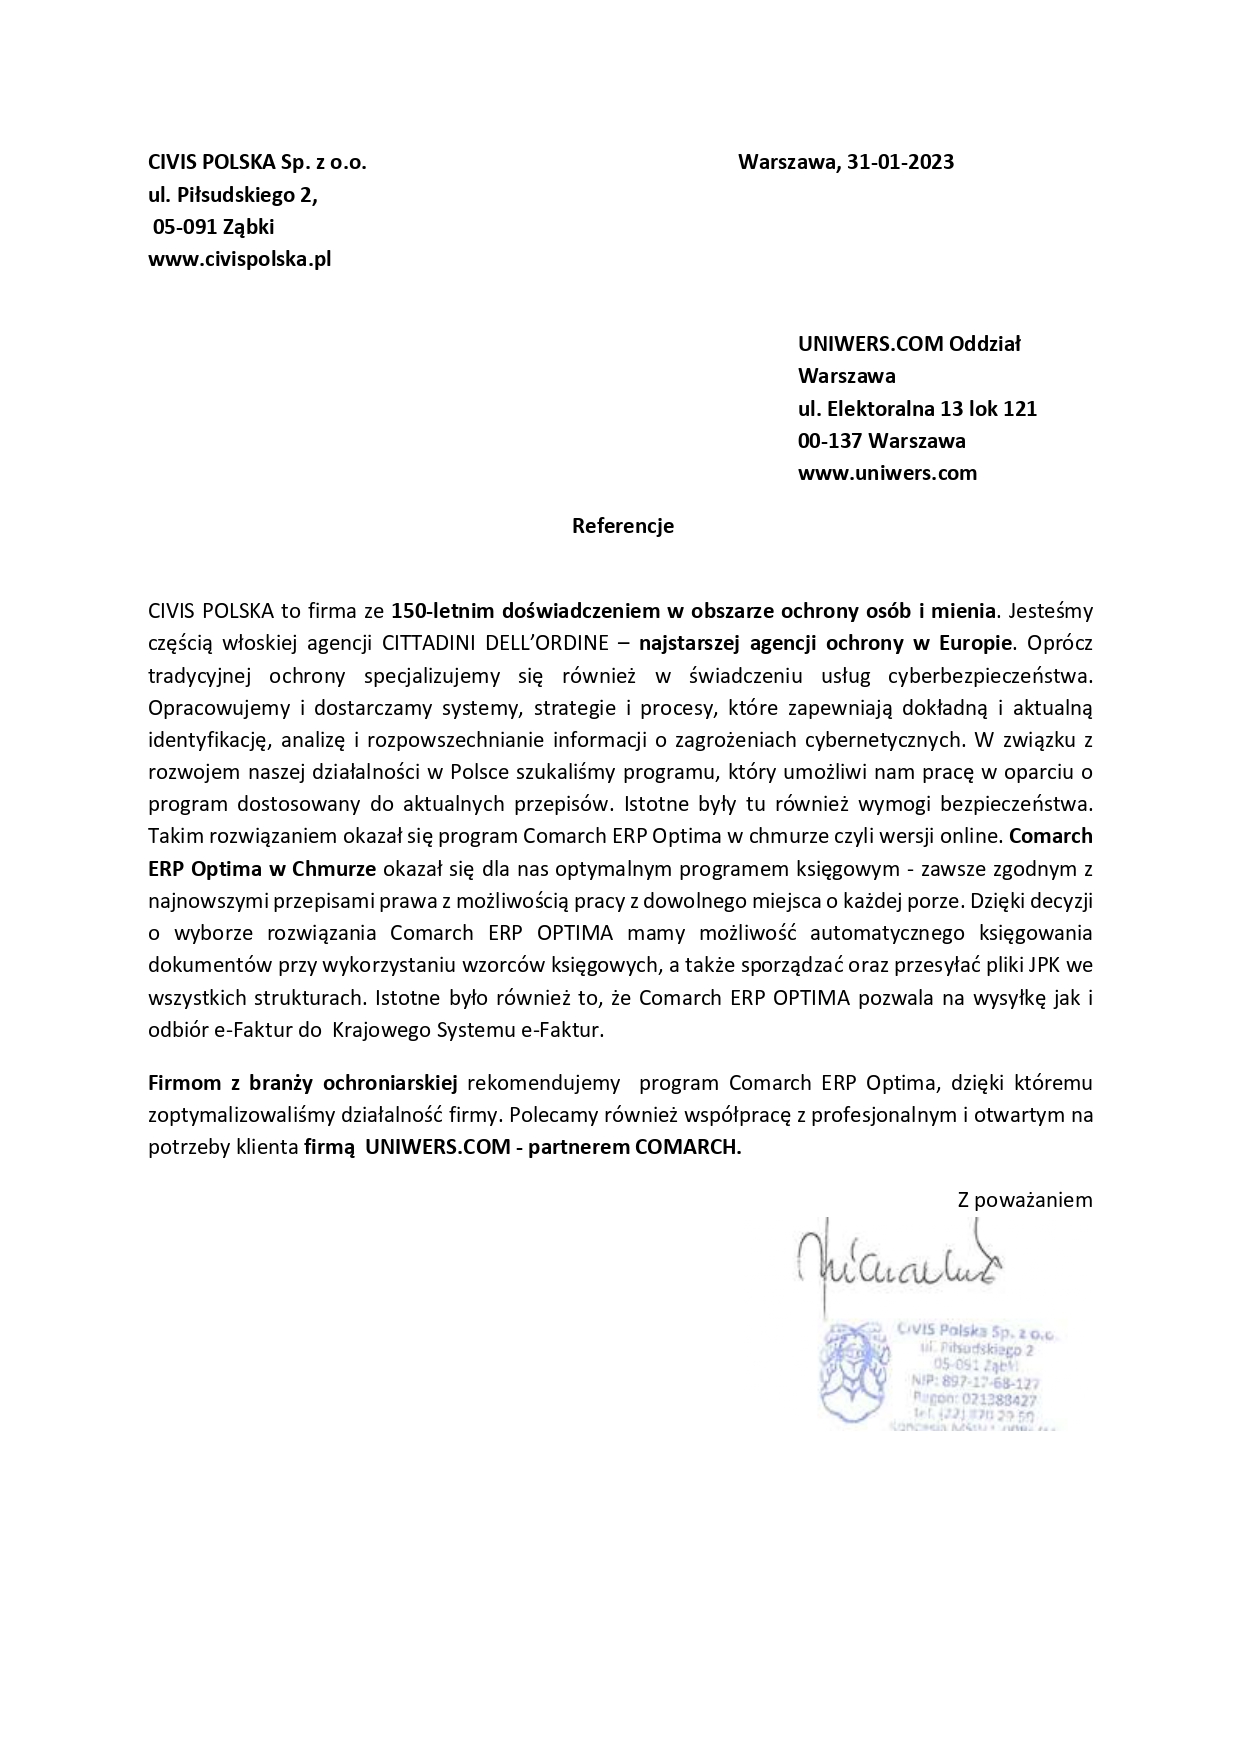 Agencji Ochrony Civis Polska